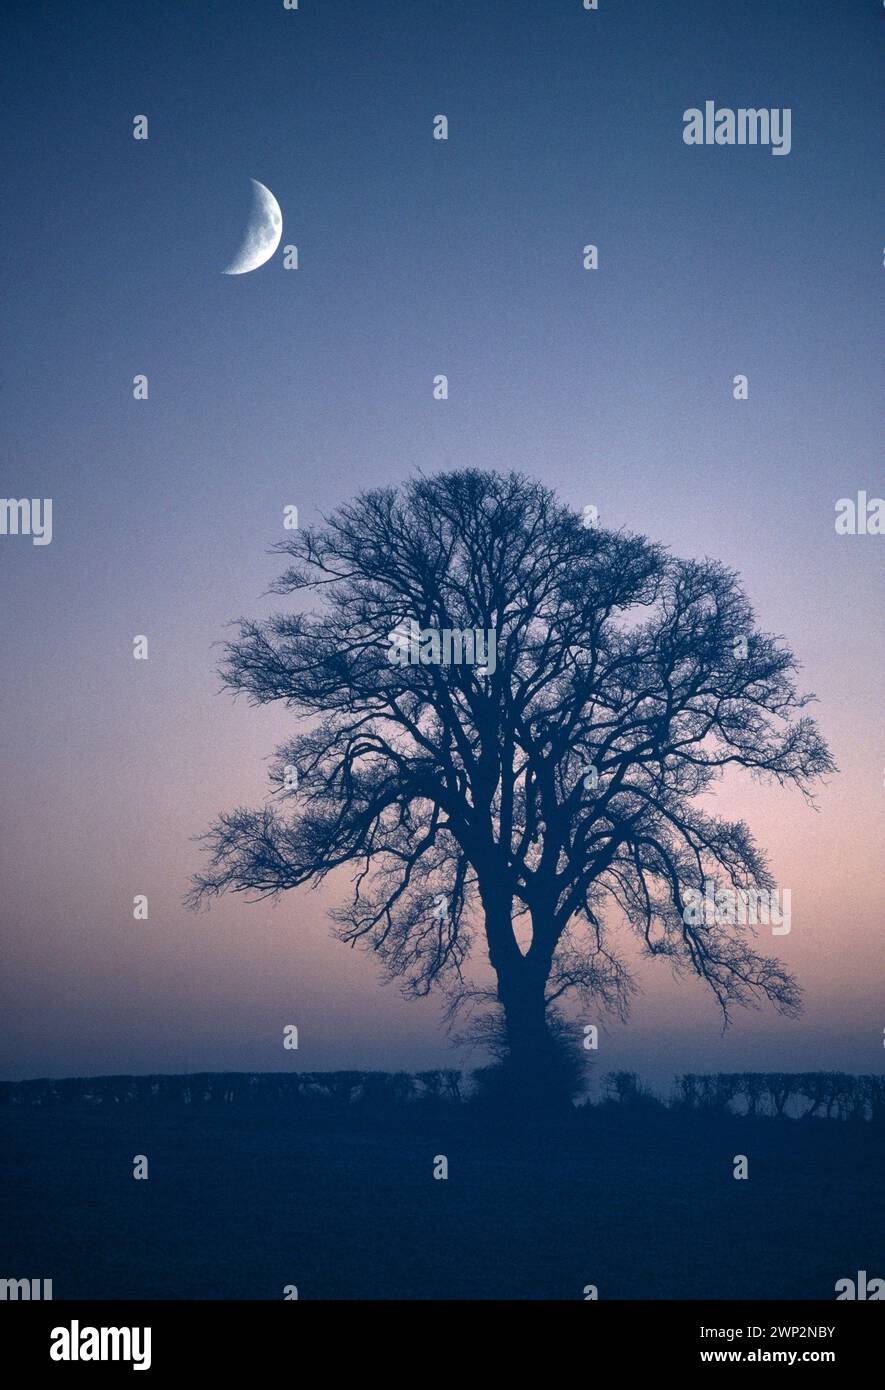 Wych Elm (Ulmus glabra) silhouette of mature tree in winter with moon in background, Berwickshire, Scotland. Stock Photo